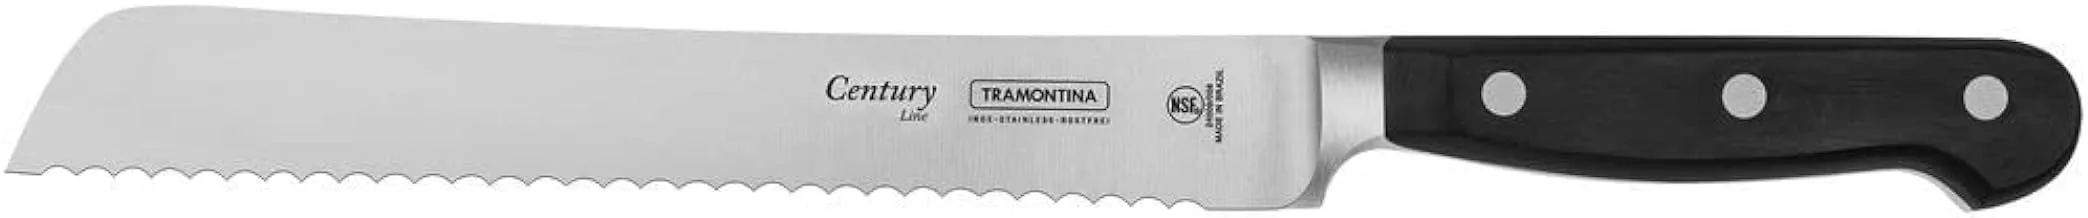 Tramontina 8 BREAD KNIFE CENTURY